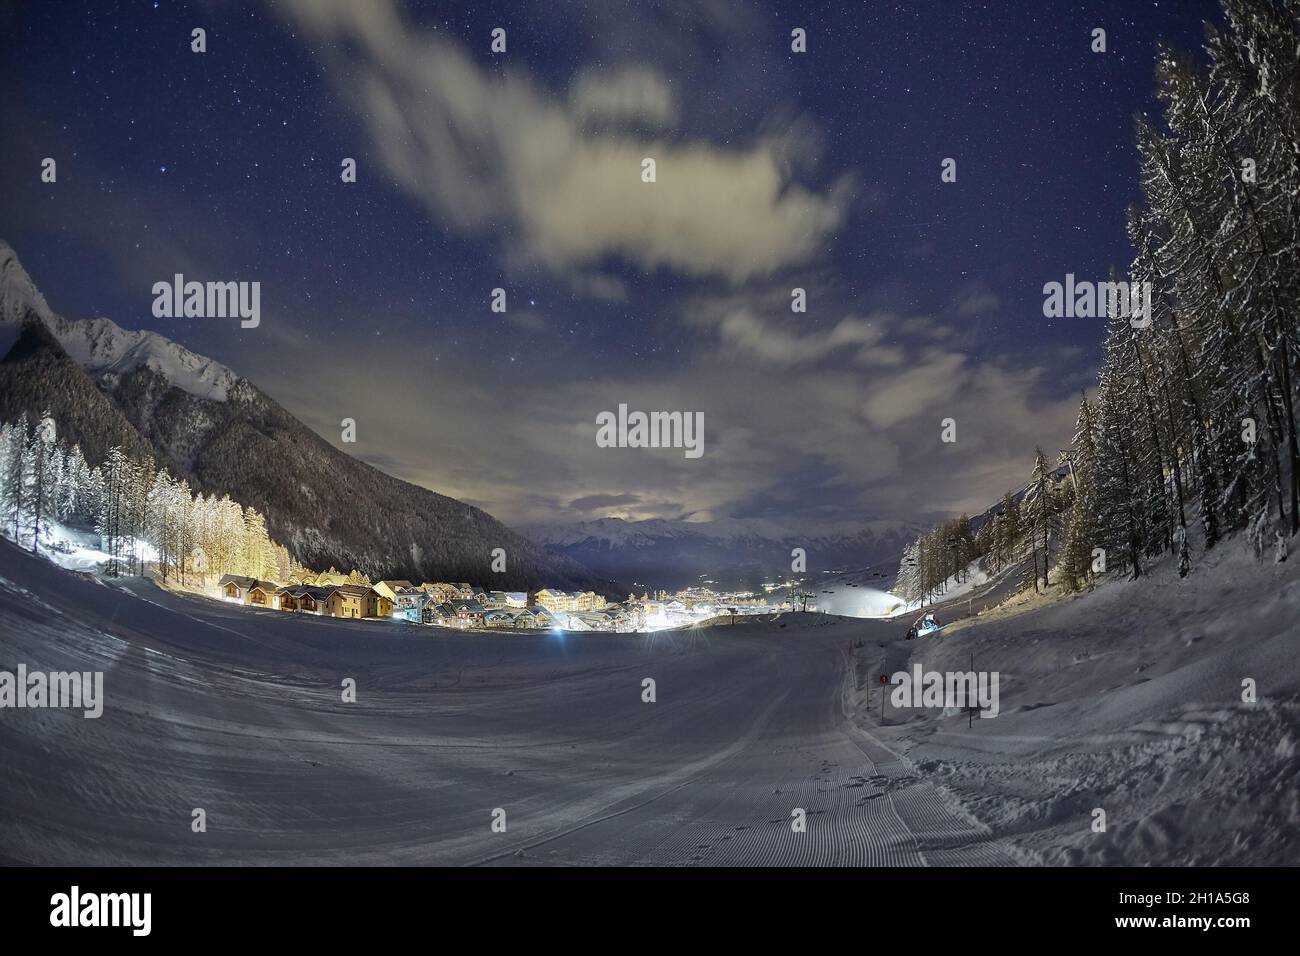 Ski slopes at night under the stars in the sky Stock Photo